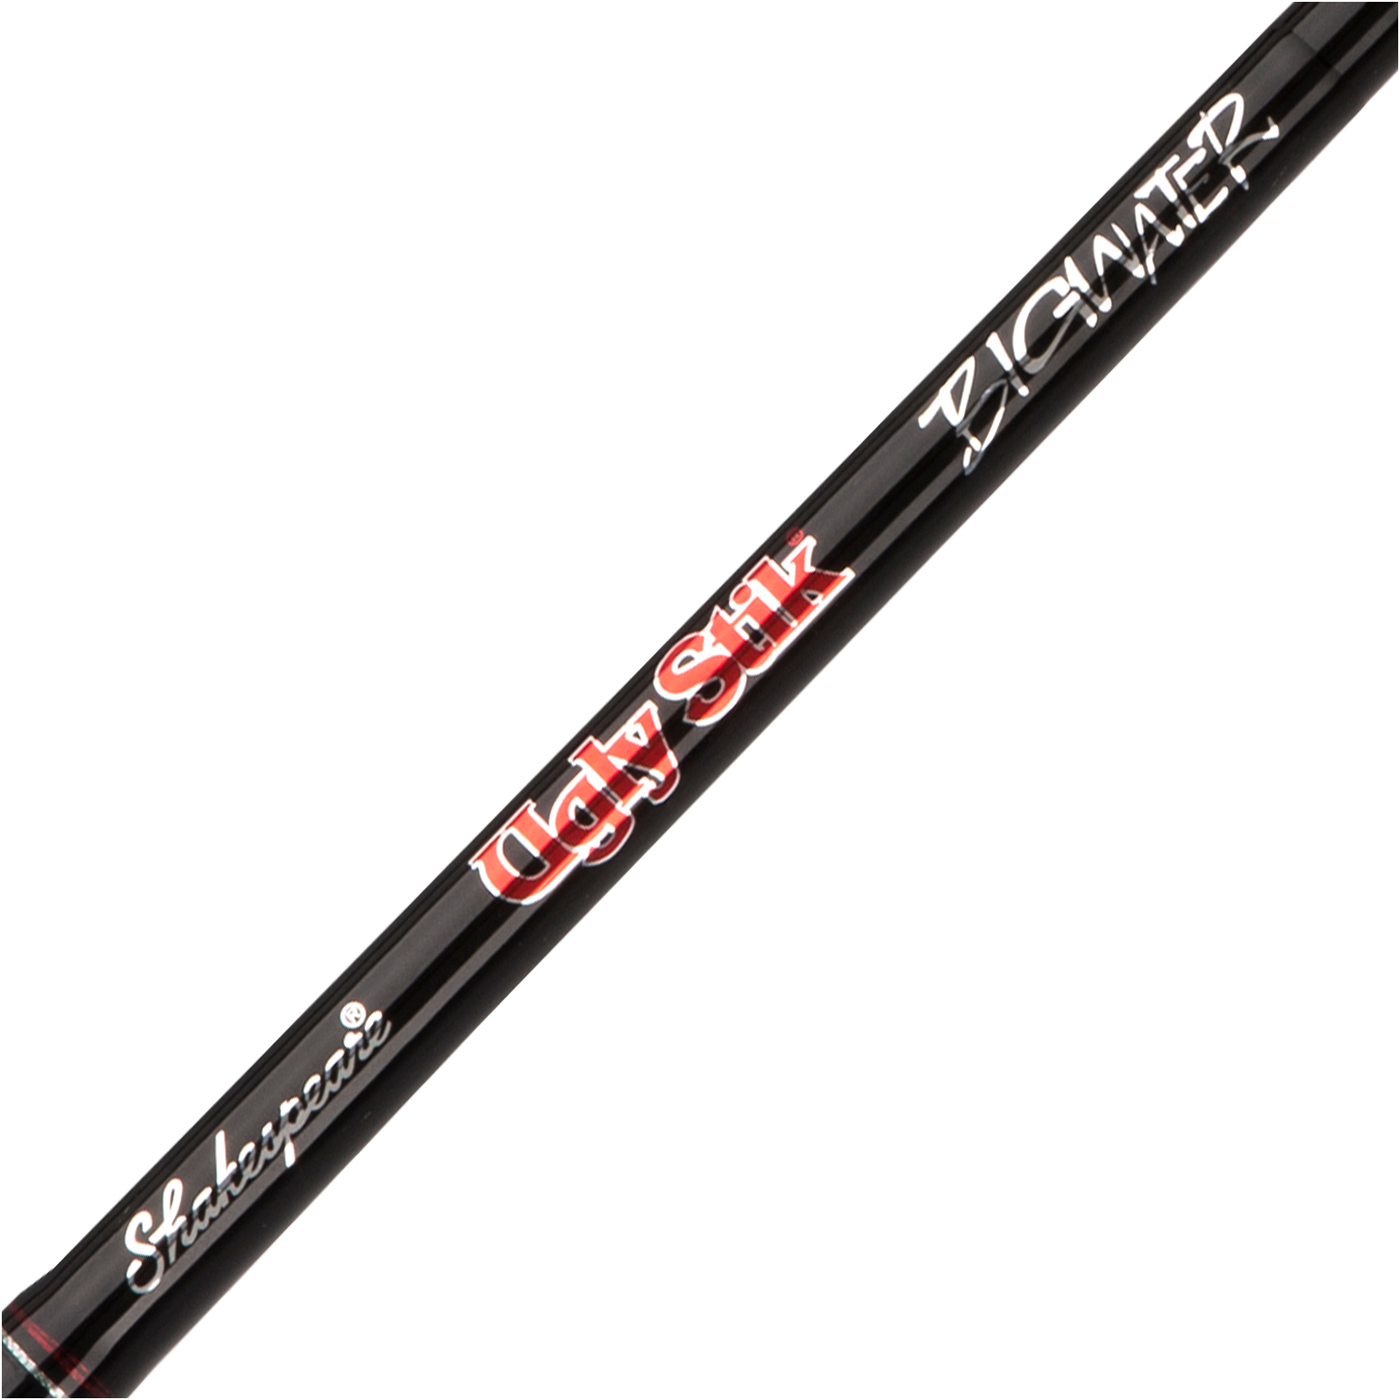  Ugly Stik Bigwater Conventional Fishing Rod, Black/Red/Yellow,  10' - Medium - 12-30lb - 2pc : Sports & Outdoors